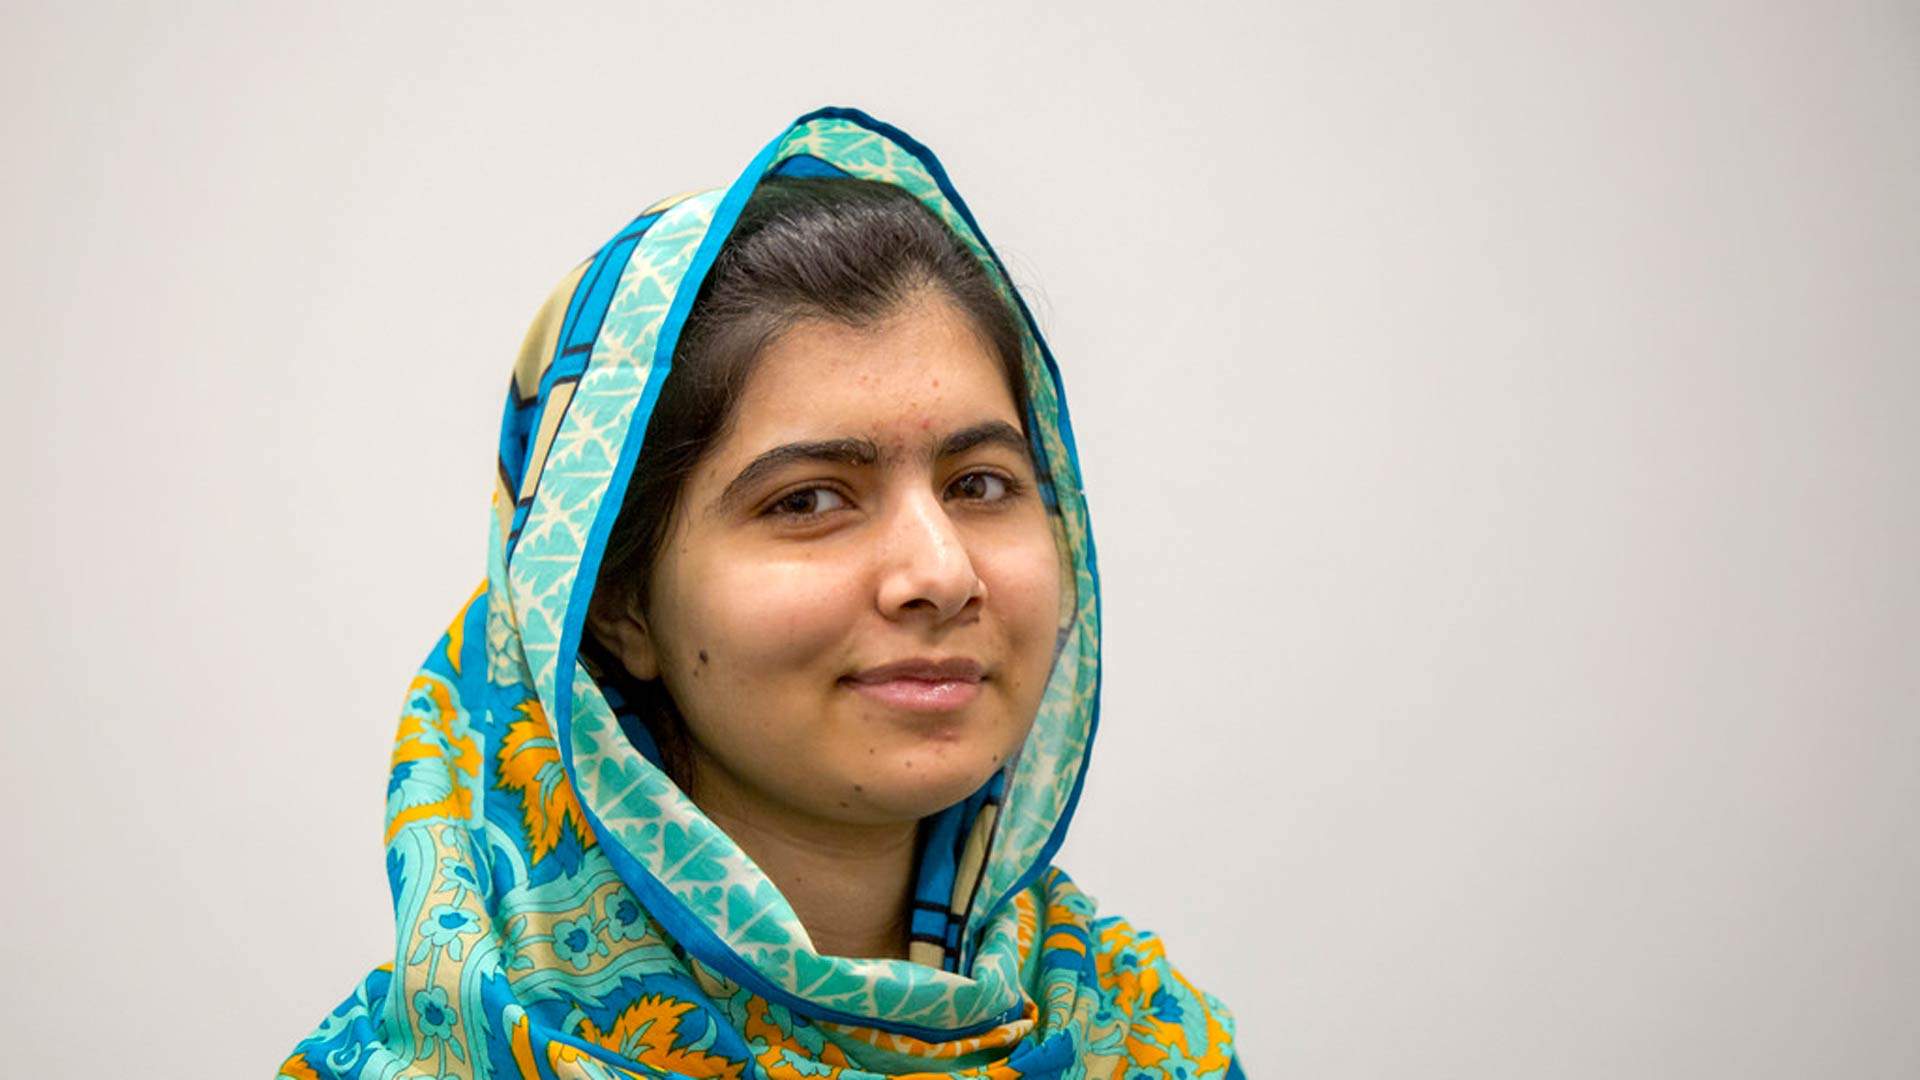 Activist Malala Yousafzai Is Making Her First Australian Visit